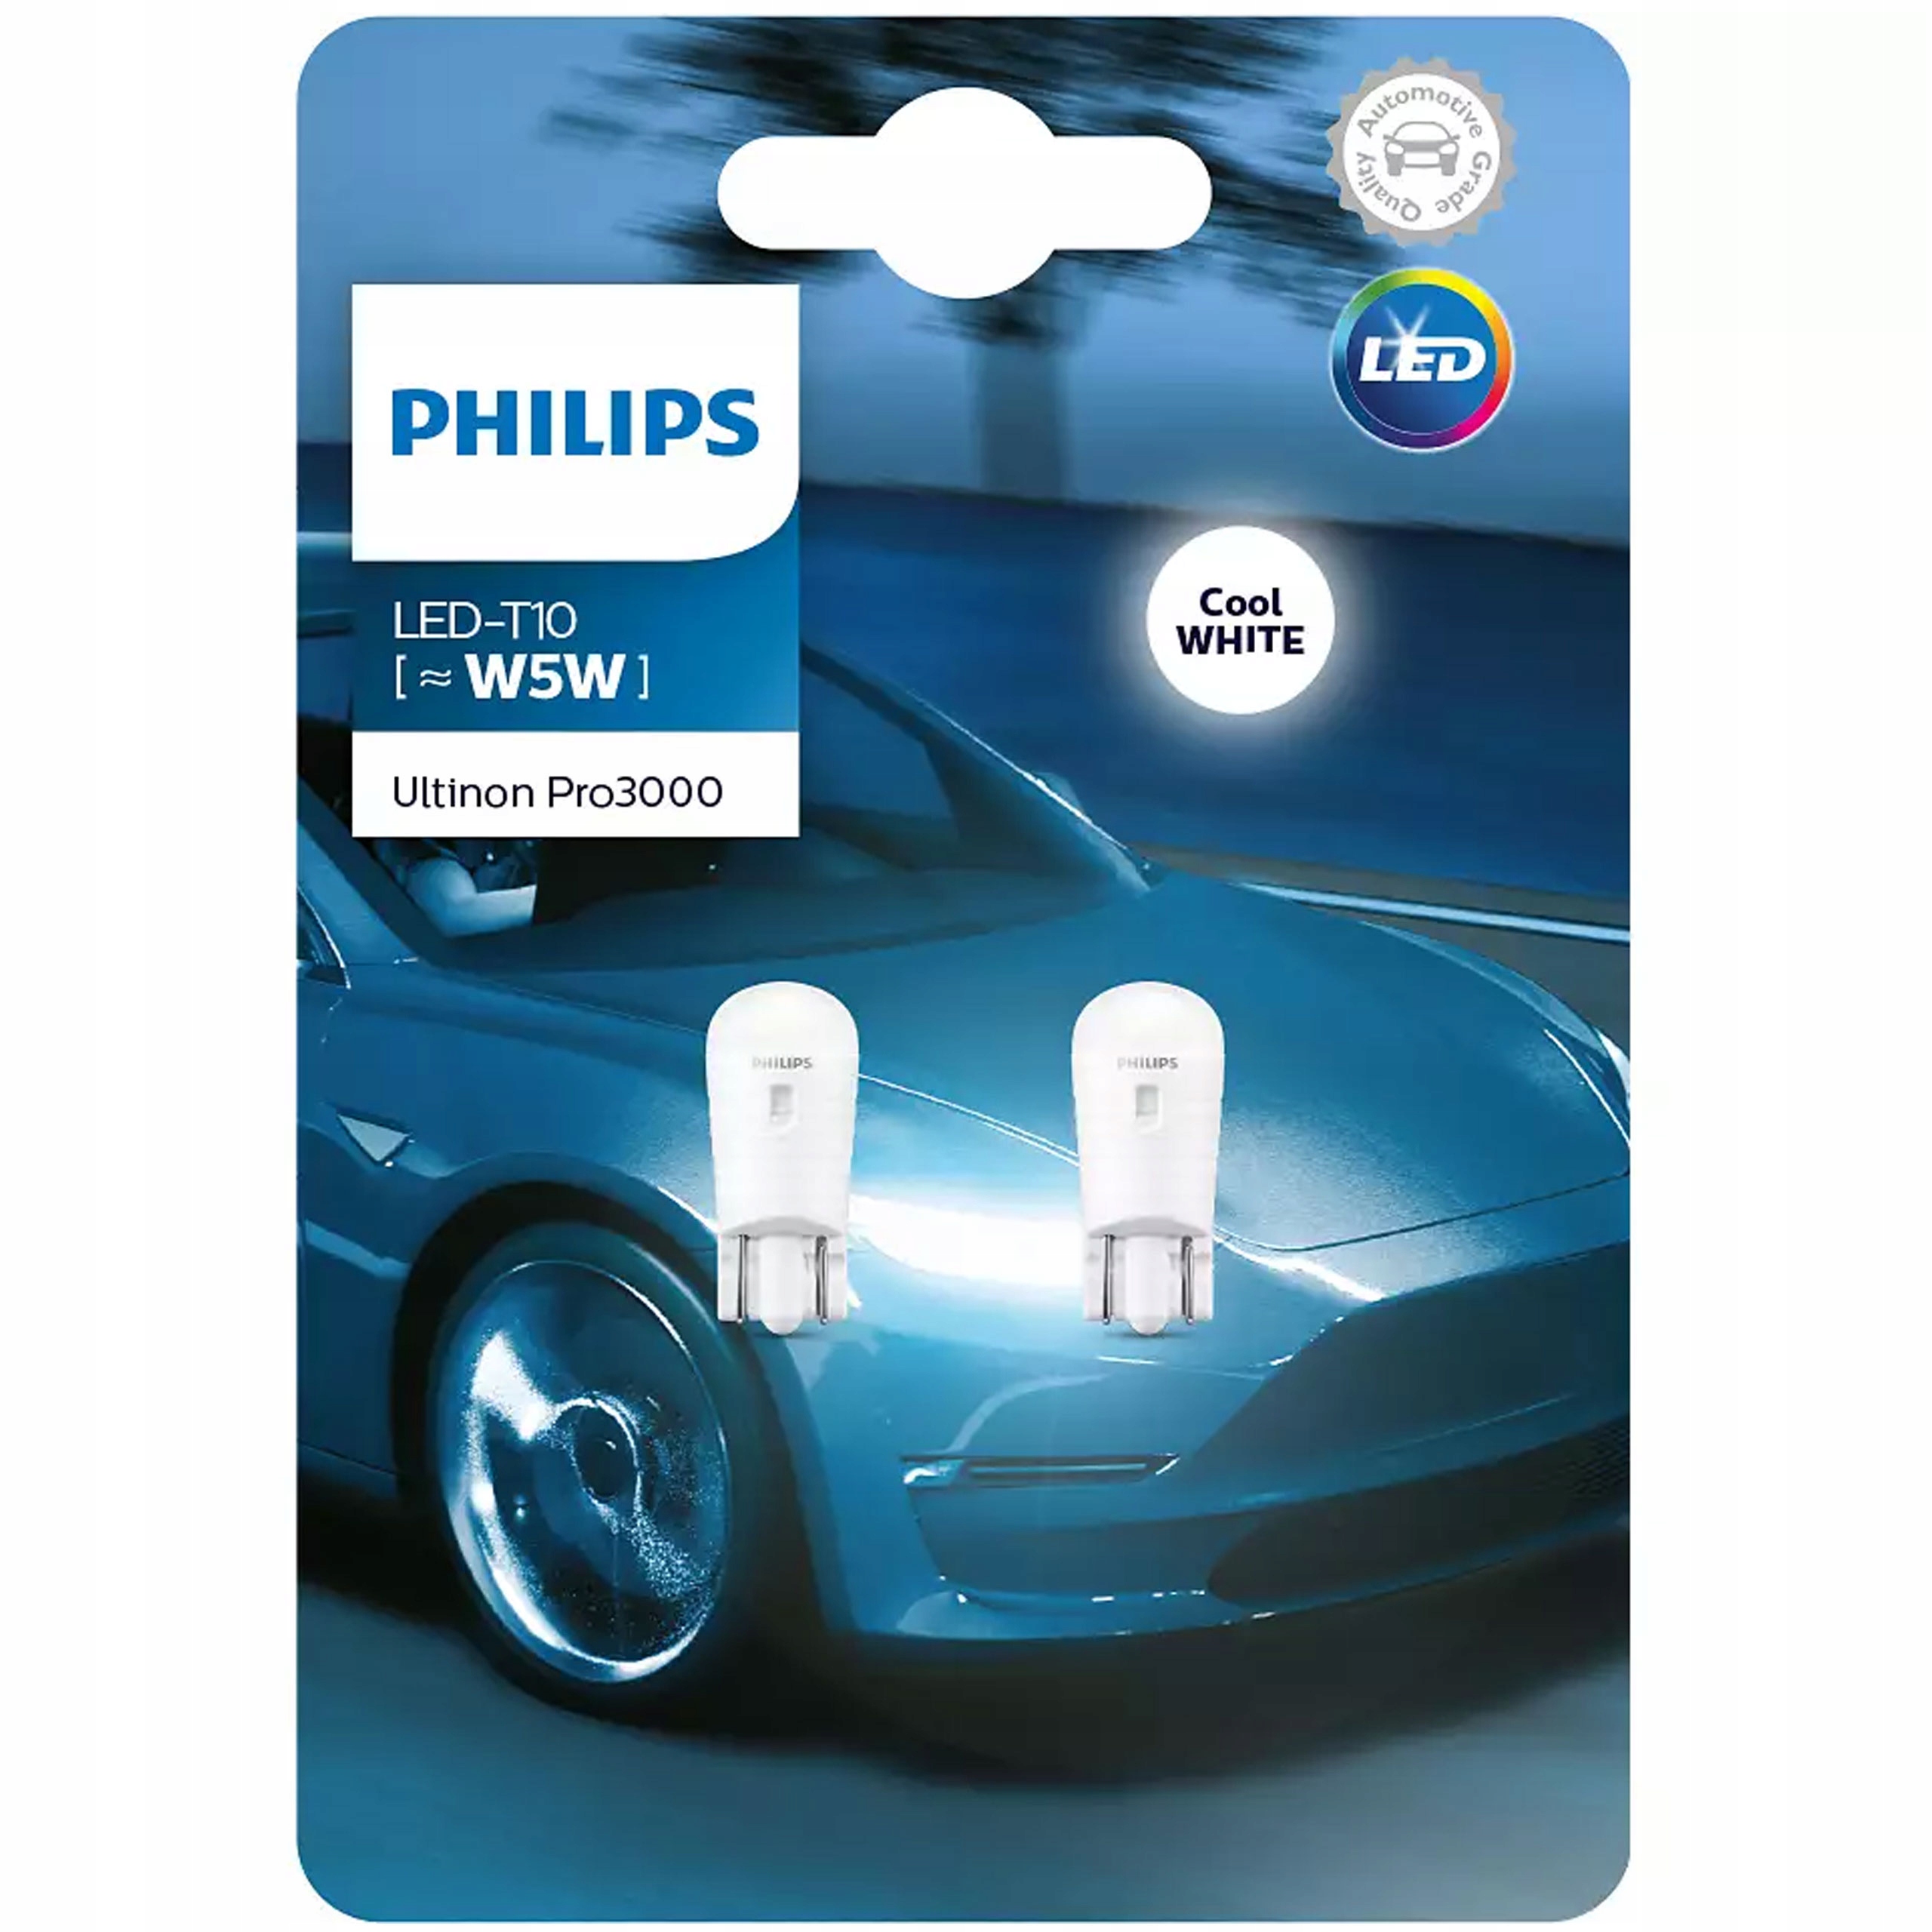 Филипс диодные. Набор автоламп led Philips 11961u30cwb2 w5w. Лампа t10 Philips (w5w) 12v Ultinon pro3000 6000k. W5w t10 Philips Ultinon led. Philips Ultinon pro3000 w5w.